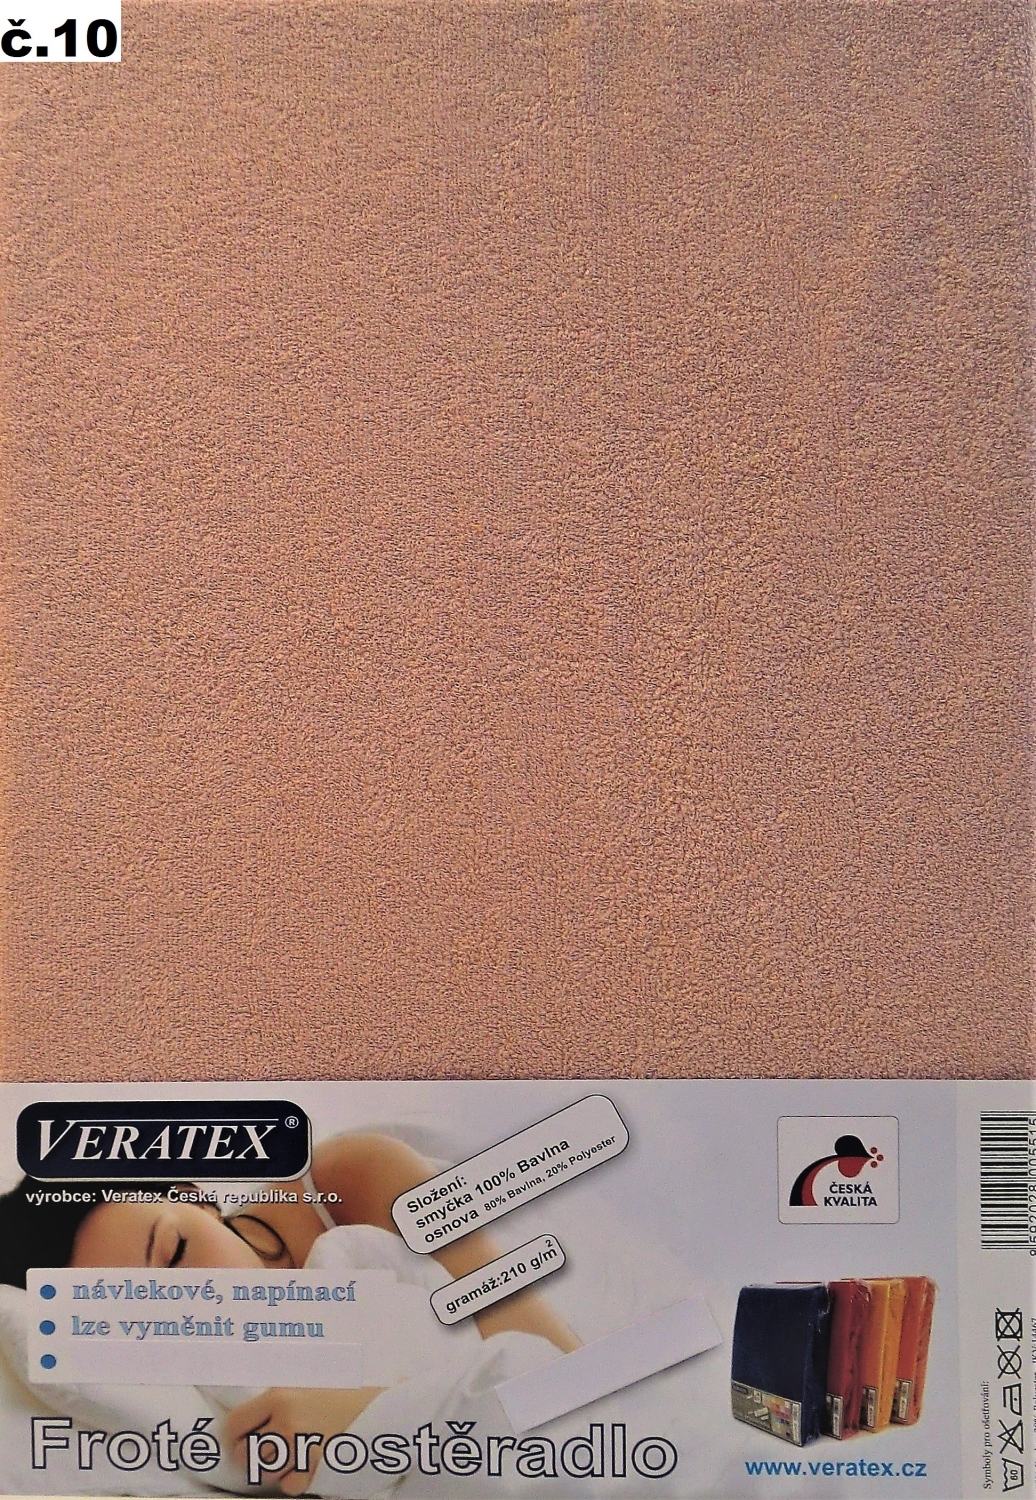 Veratex Froté prostěradlo 160x220/16 cm (č.10-starorůžová)